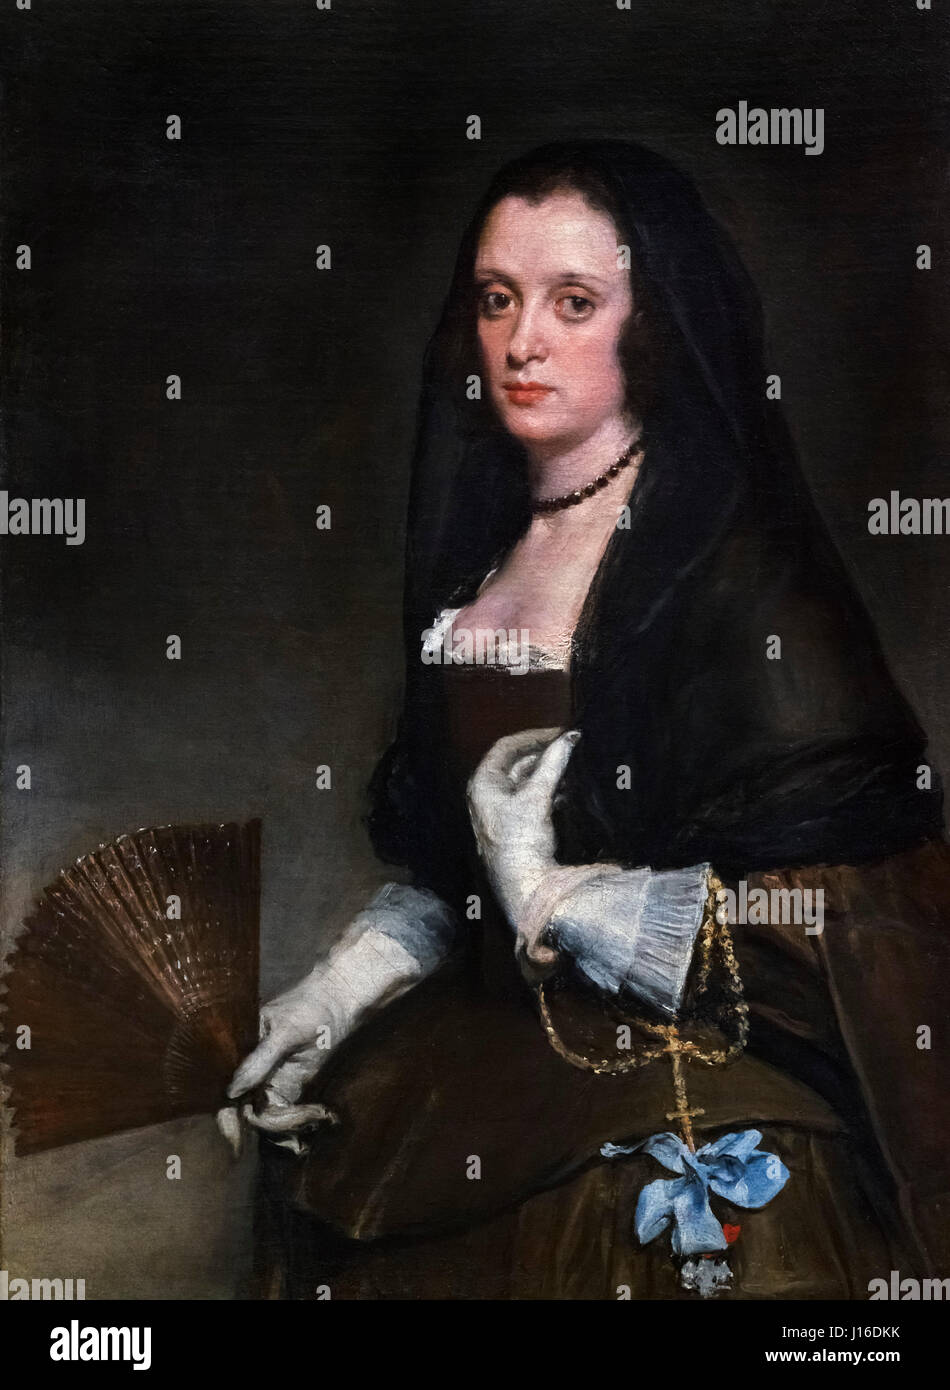 Velázquez. "La dama con un ventilador' de Diego Velázquez (1599-1660), óleo sobre lienzo, c.1640 Foto de stock